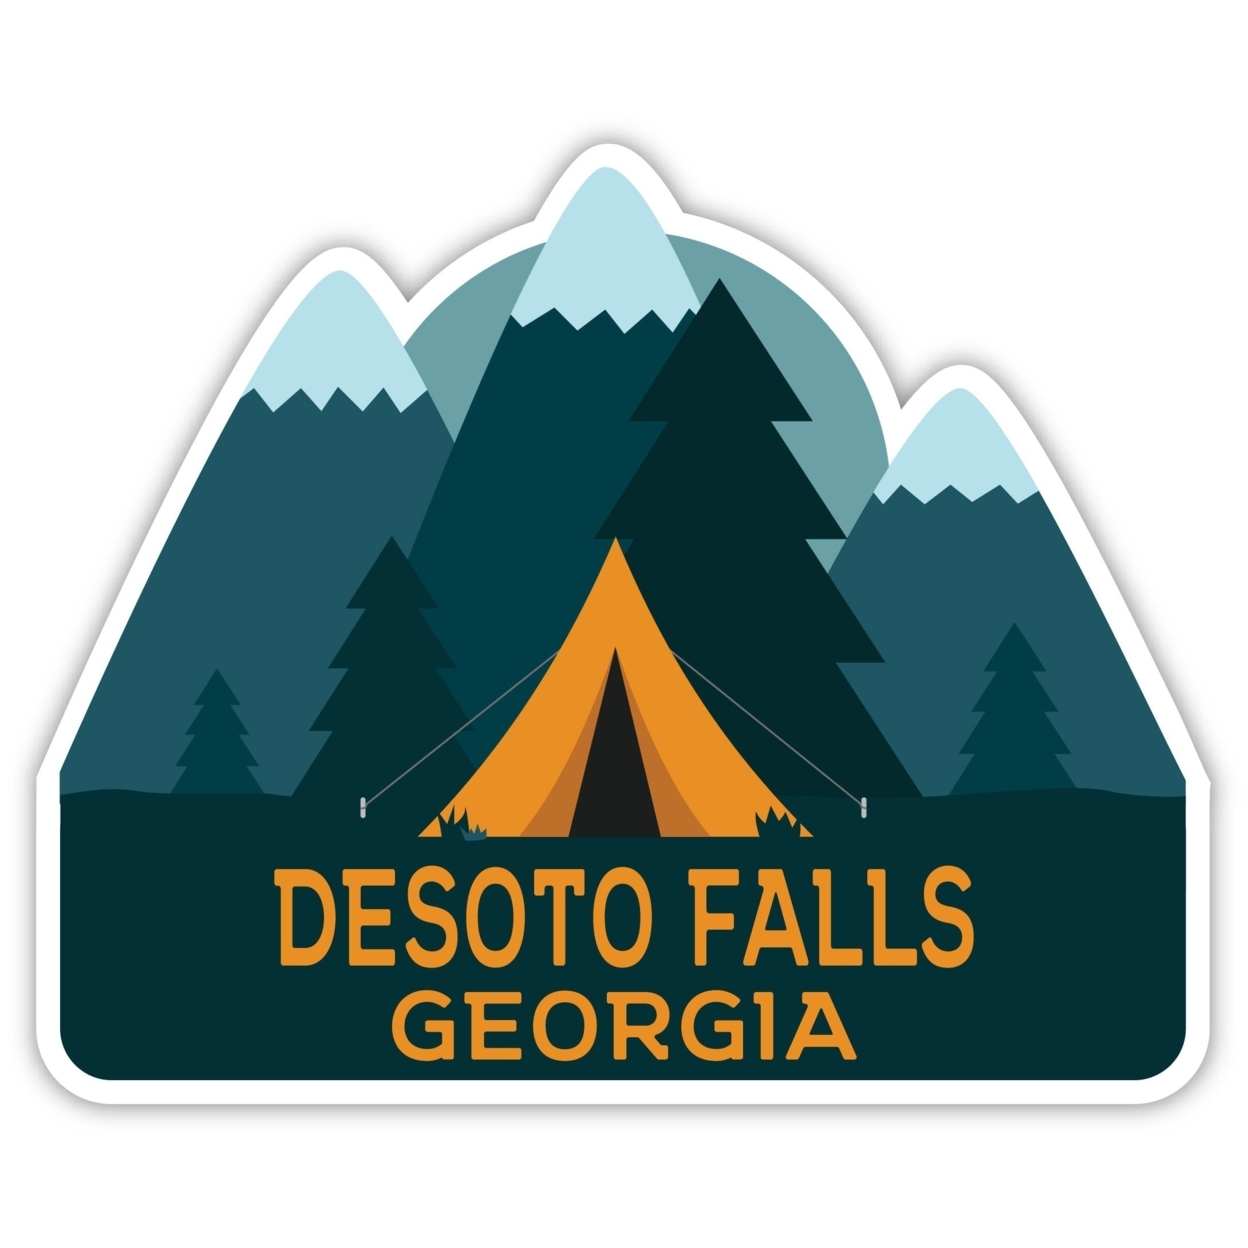 DeSoto Falls Georgia Souvenir Decorative Stickers (Choose Theme And Size) - Single Unit, 4-Inch, Tent